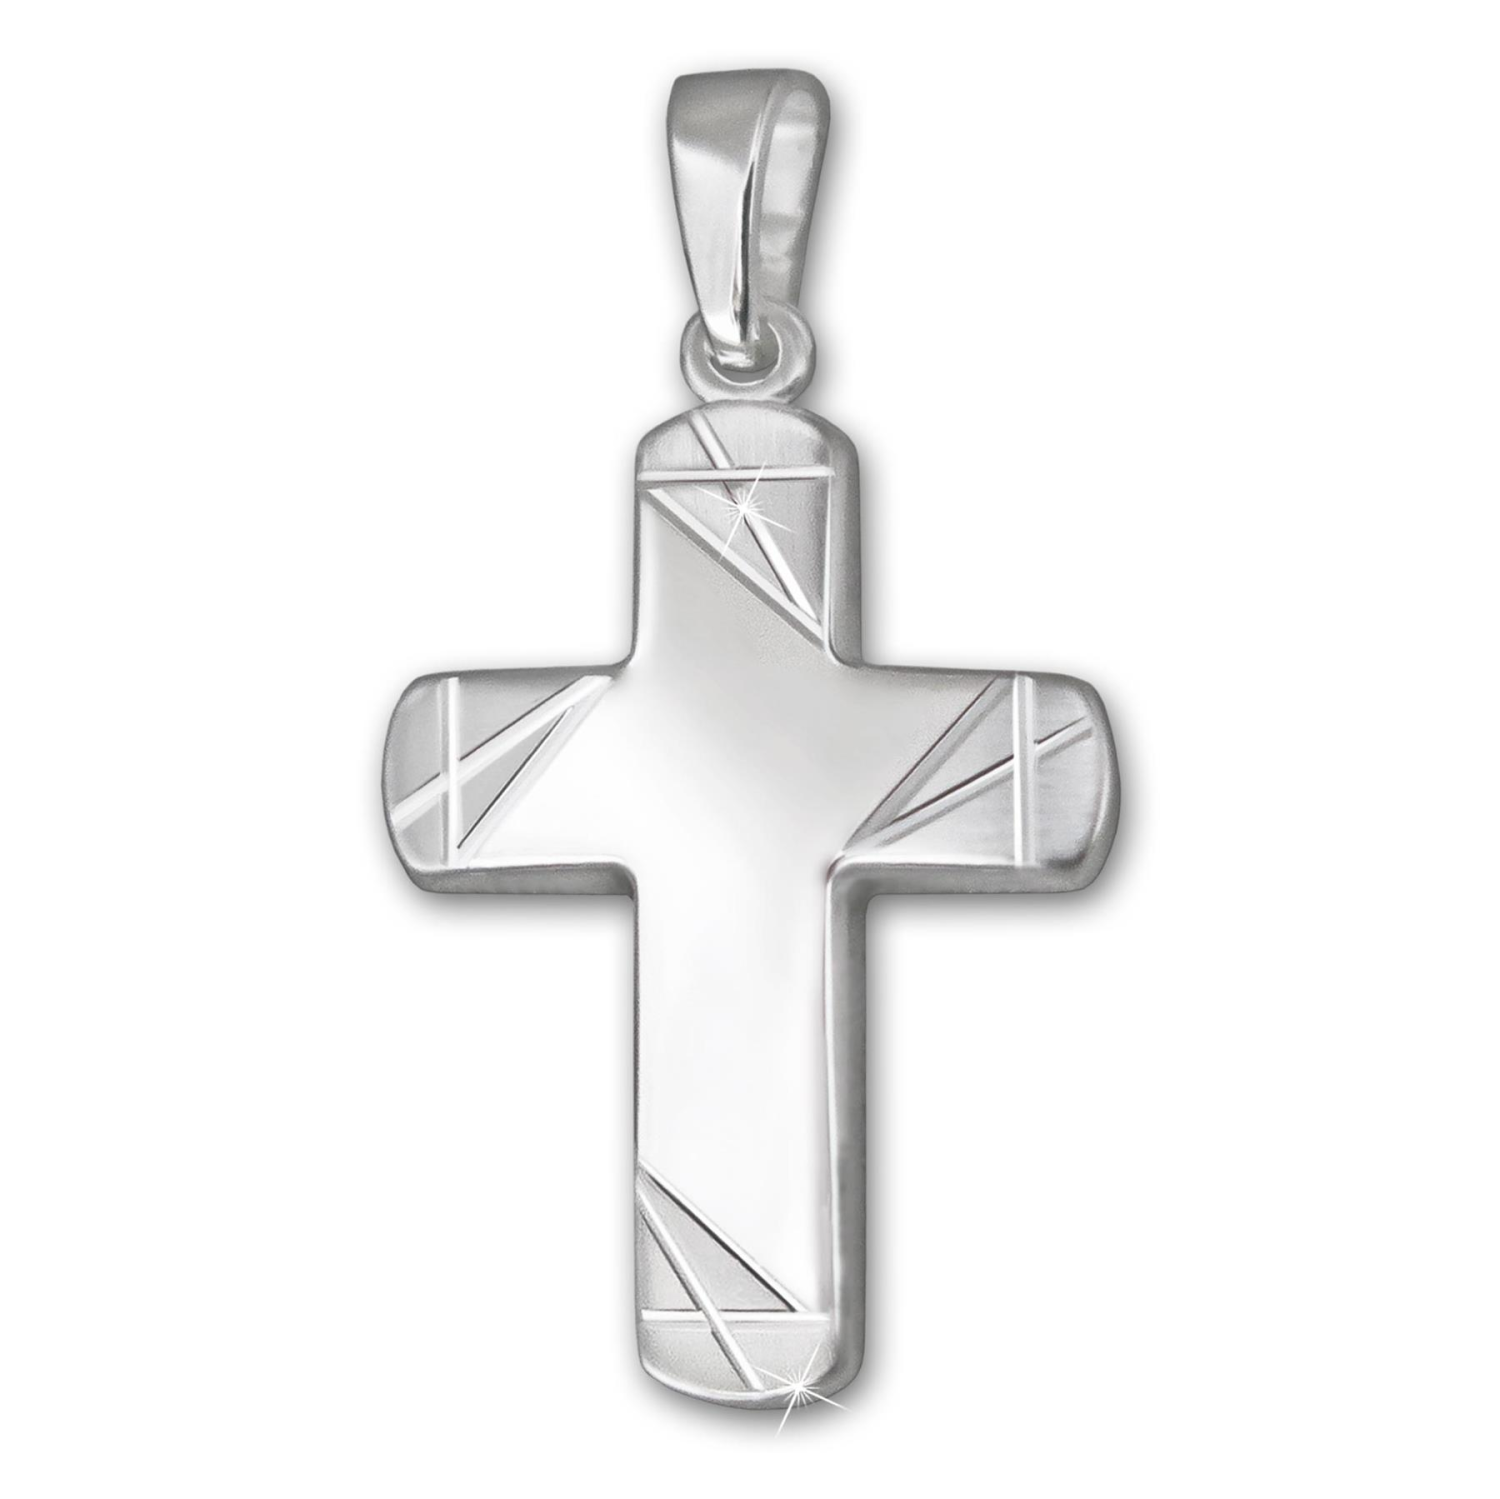 Silbernes Kreuz 20 mm breite Balken, innen glänzend, Kreuzenden matt verziert mit Linien gekreuzt gemustert SILBER 925